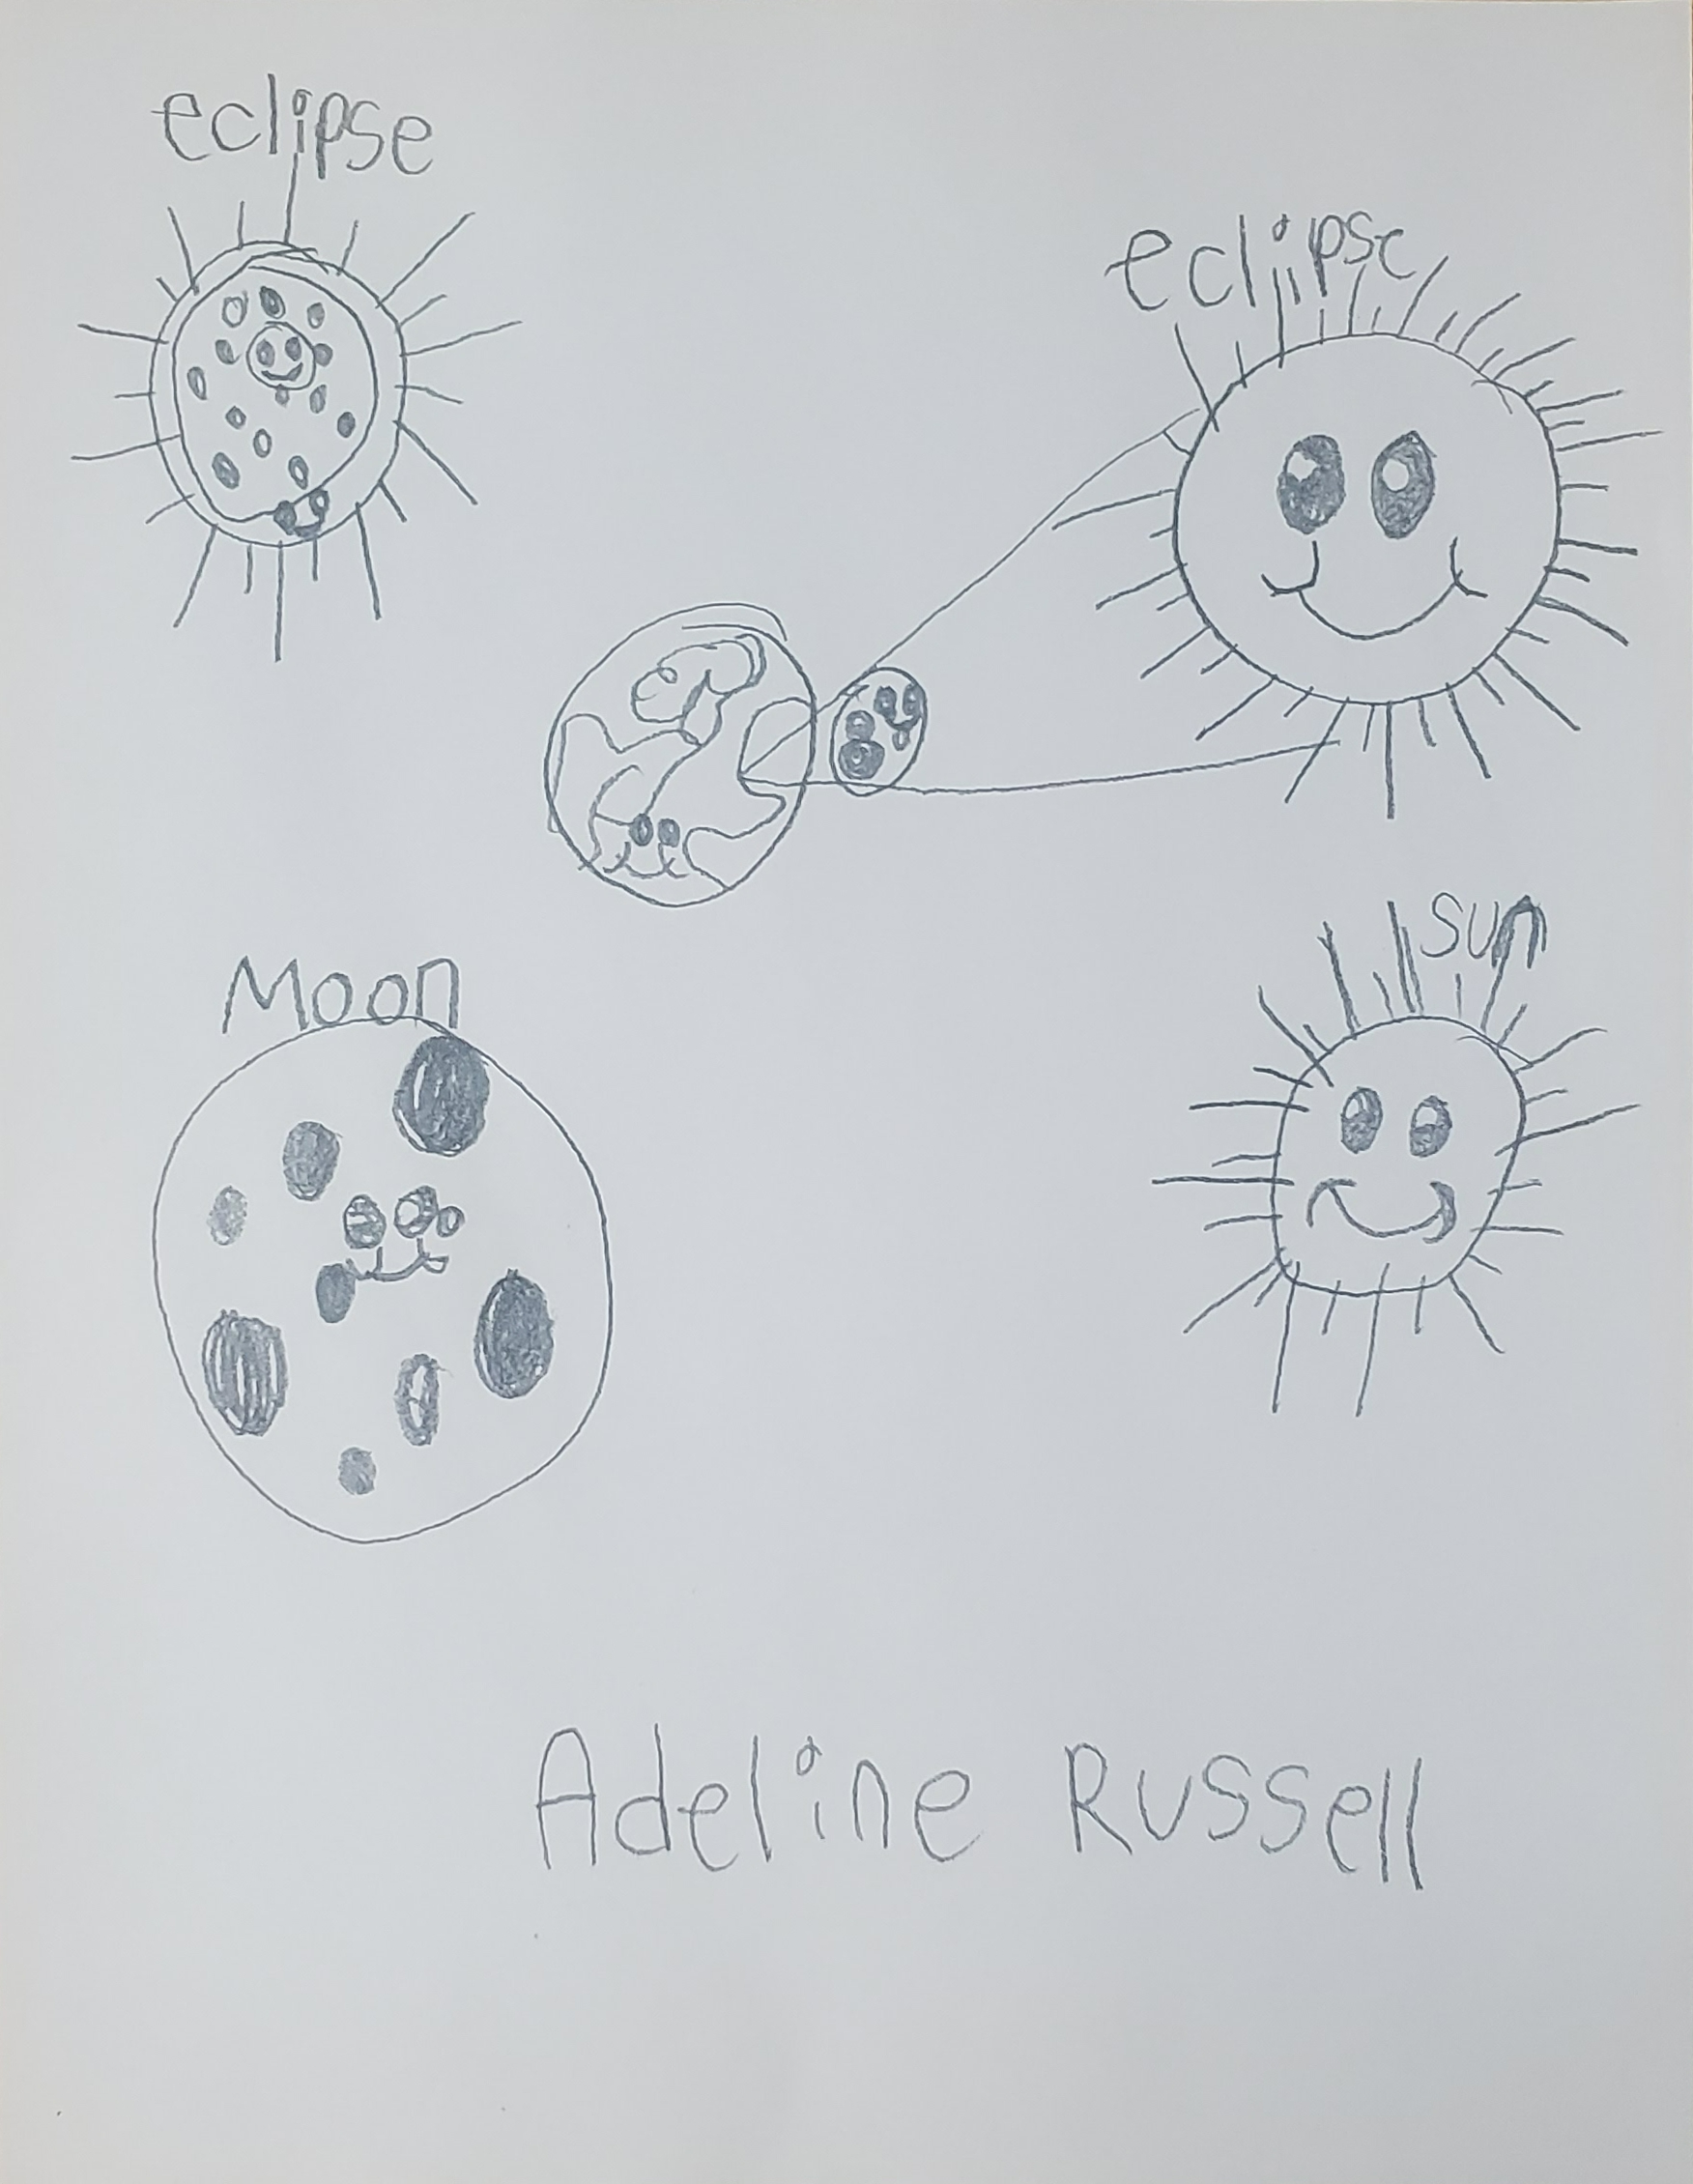 1st Grader Adeline Russell's Drawing of her Eclipse Interpretation